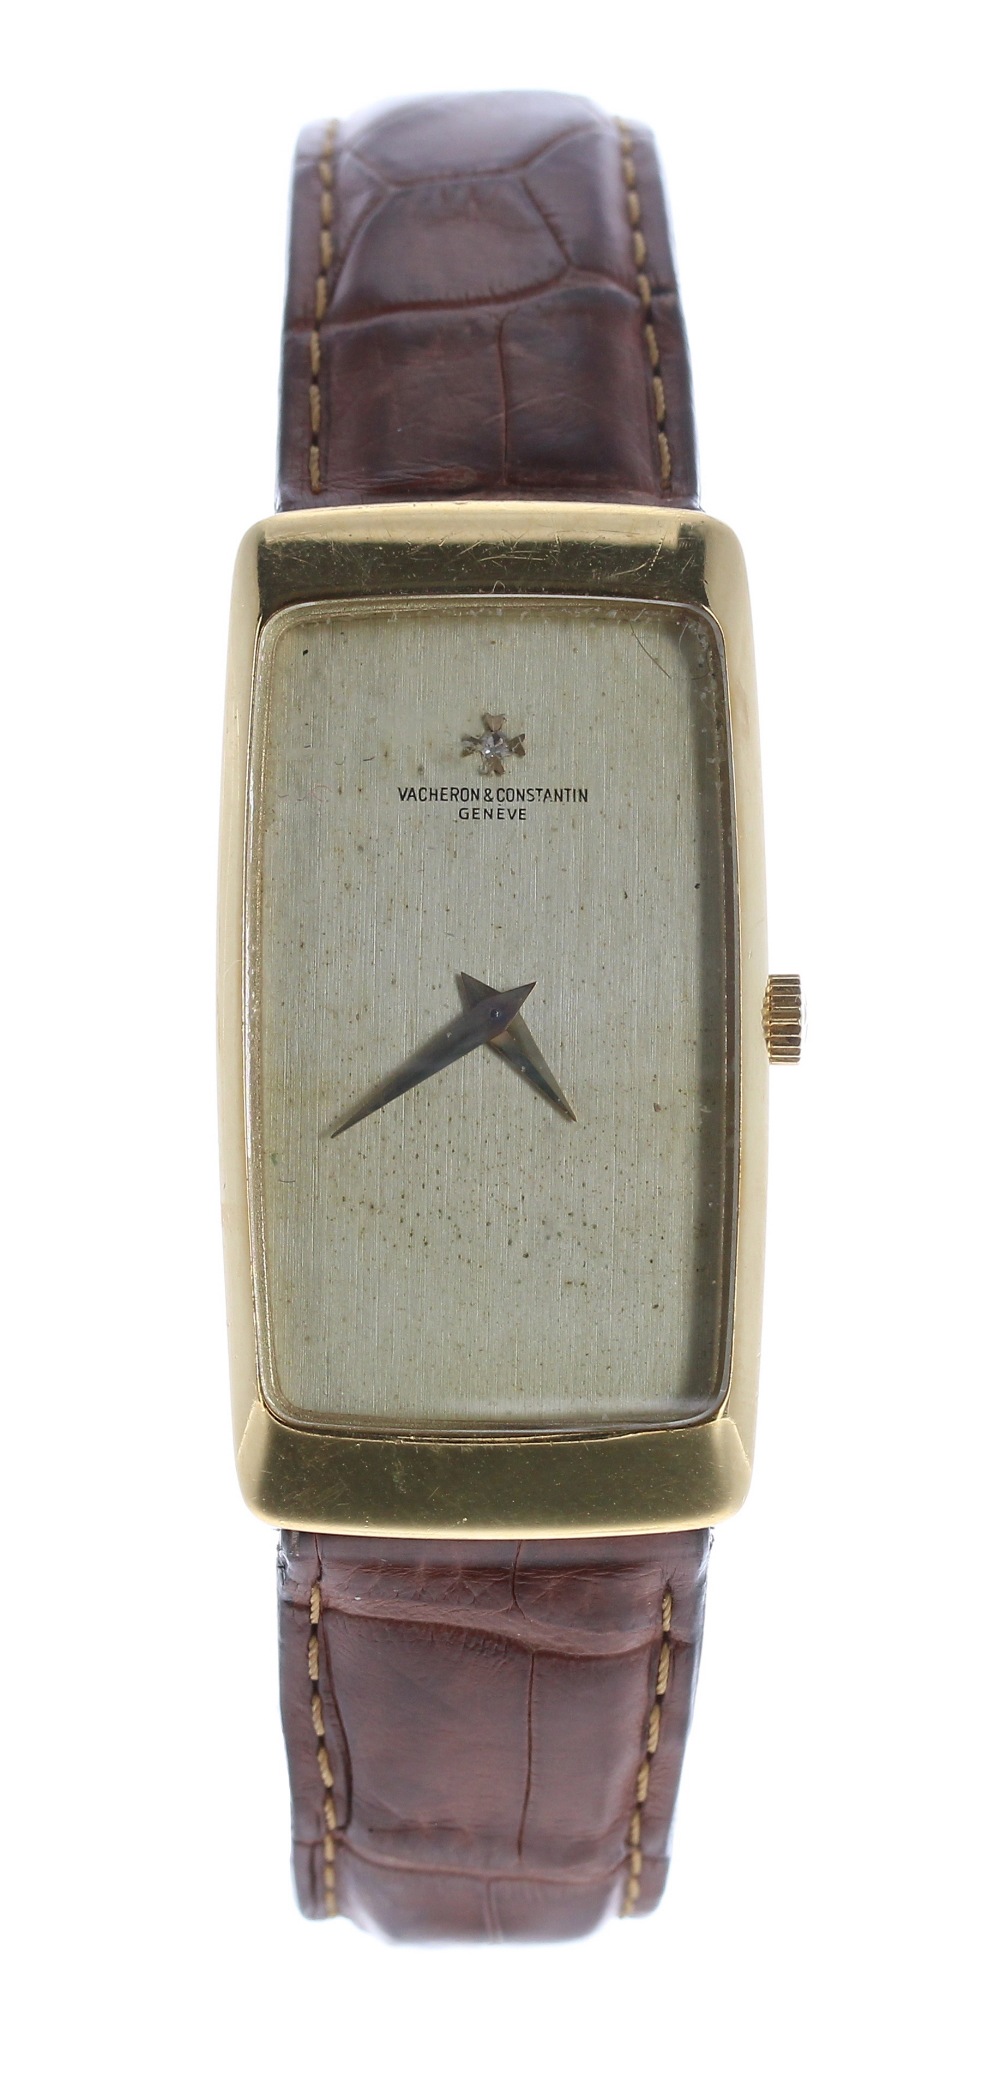 Vacheron & Constantin Genéve 18ct rectangular curved gentleman's dress watch, ref. 35204, circa